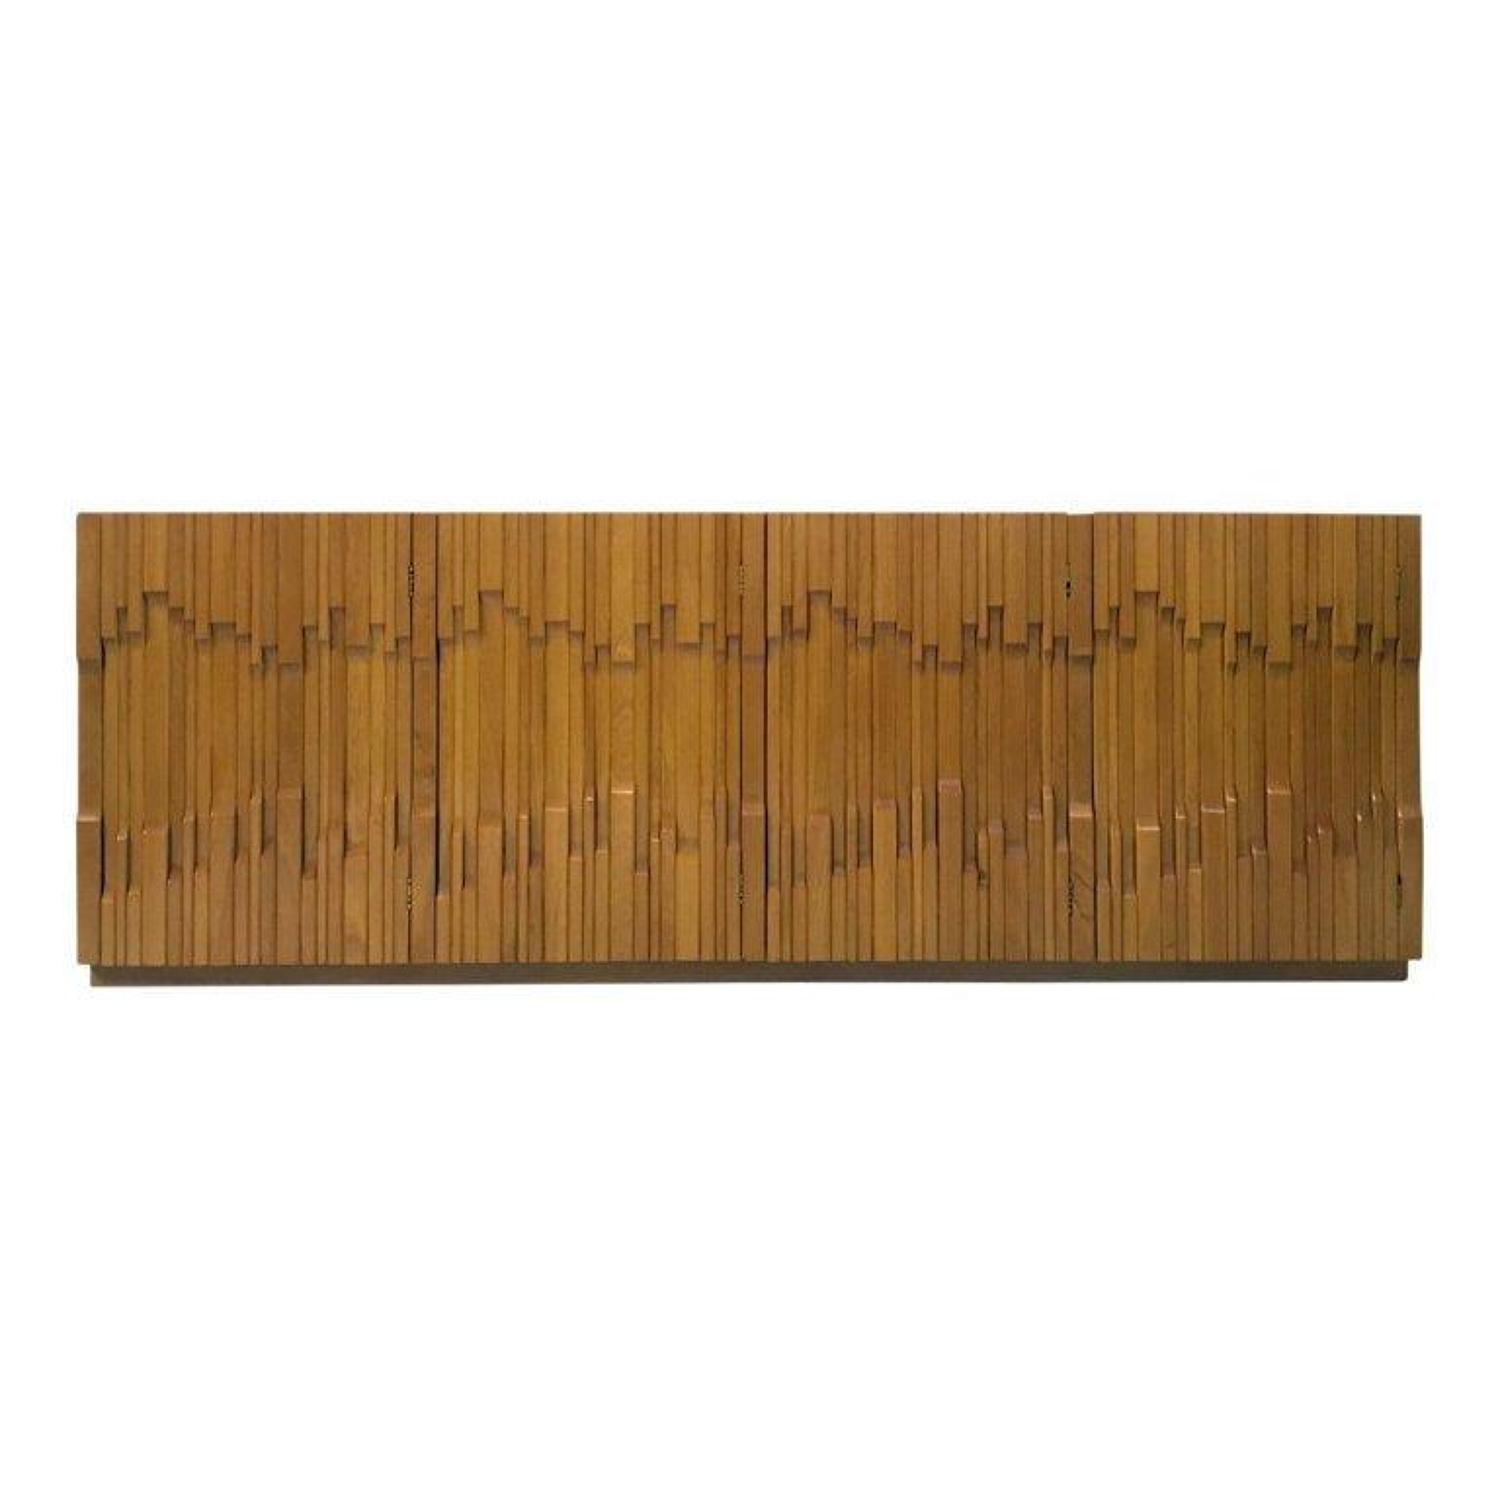 Pianoforte sideboard by Luciano Frigerio